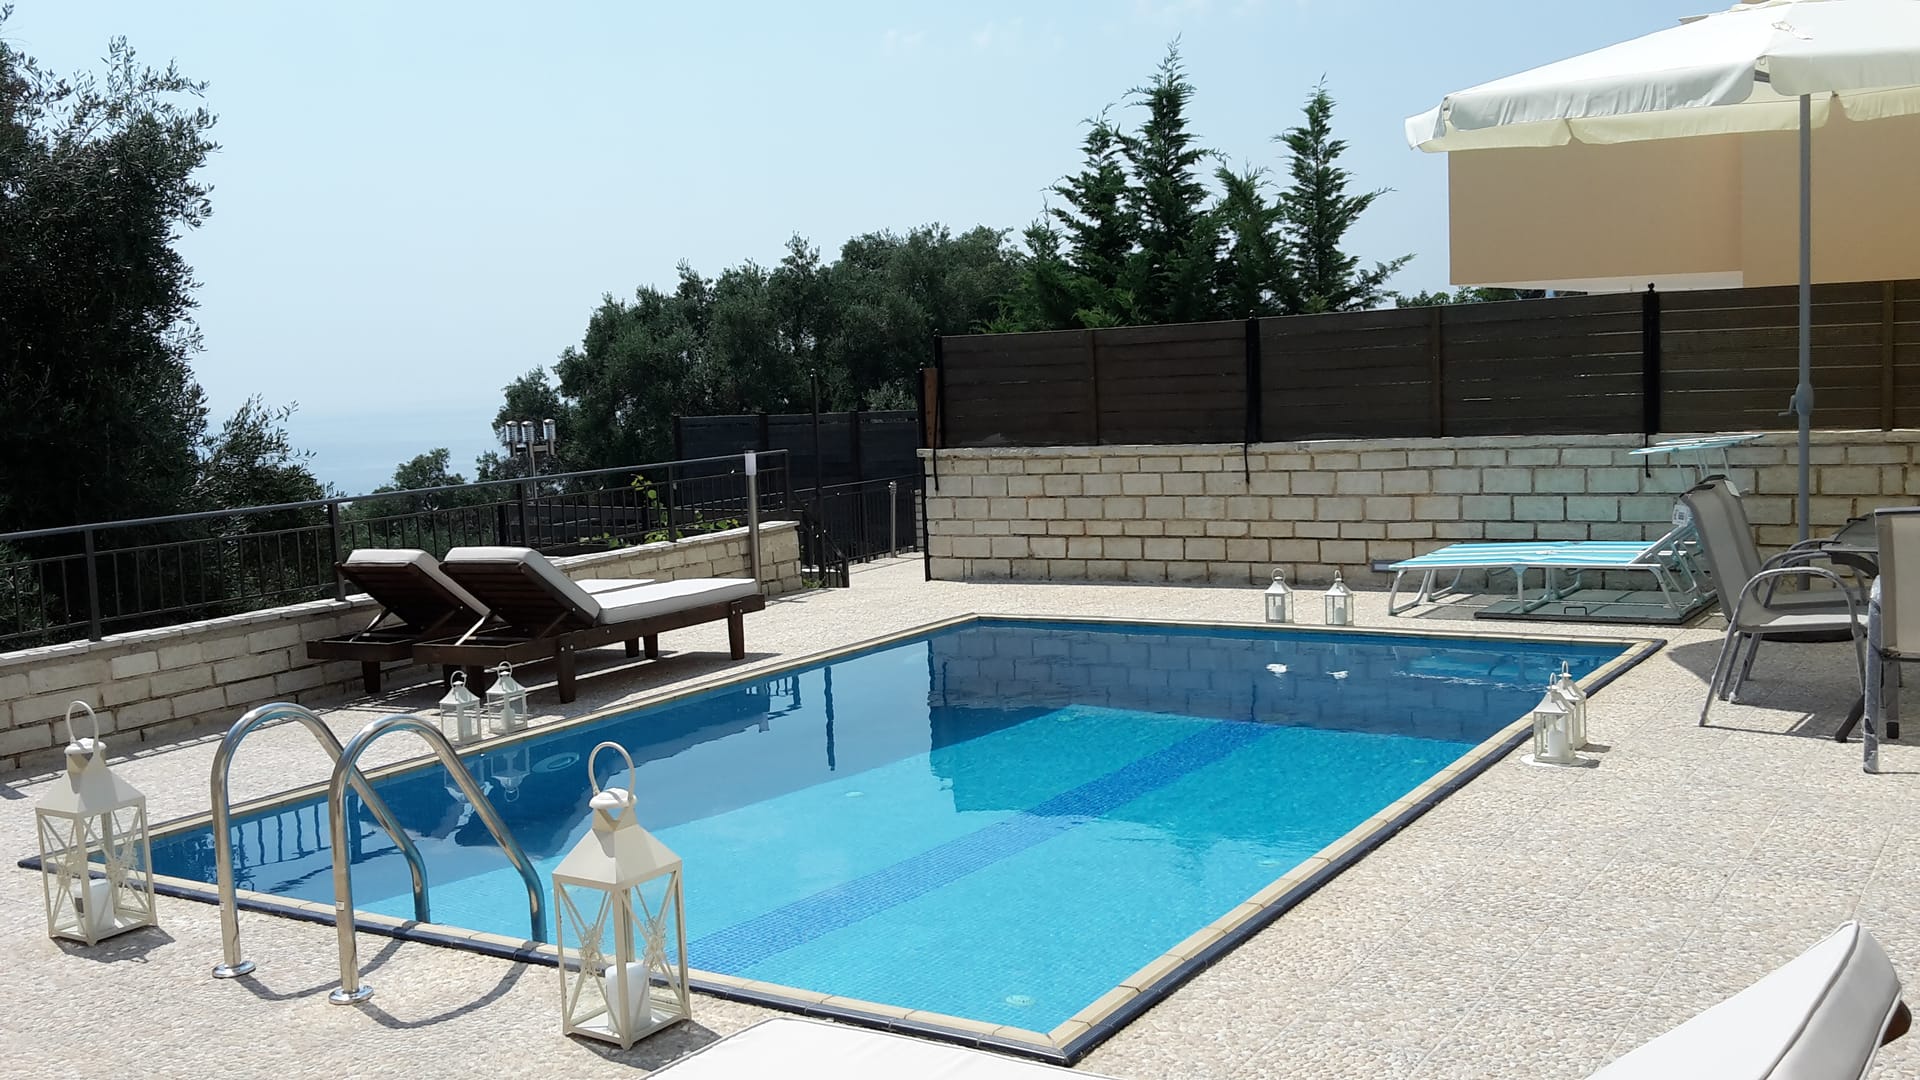 Achillion Luxury Villa - Πέραμα, Κέρκυρα ✦ 4 Ημέρες (3 Διανυκτερεύσεις) ✦ Έως 8 άτομα ✦ 1 ✦ έως 30/09/2023 ✦ Υπέροχη Τοποθεσία!